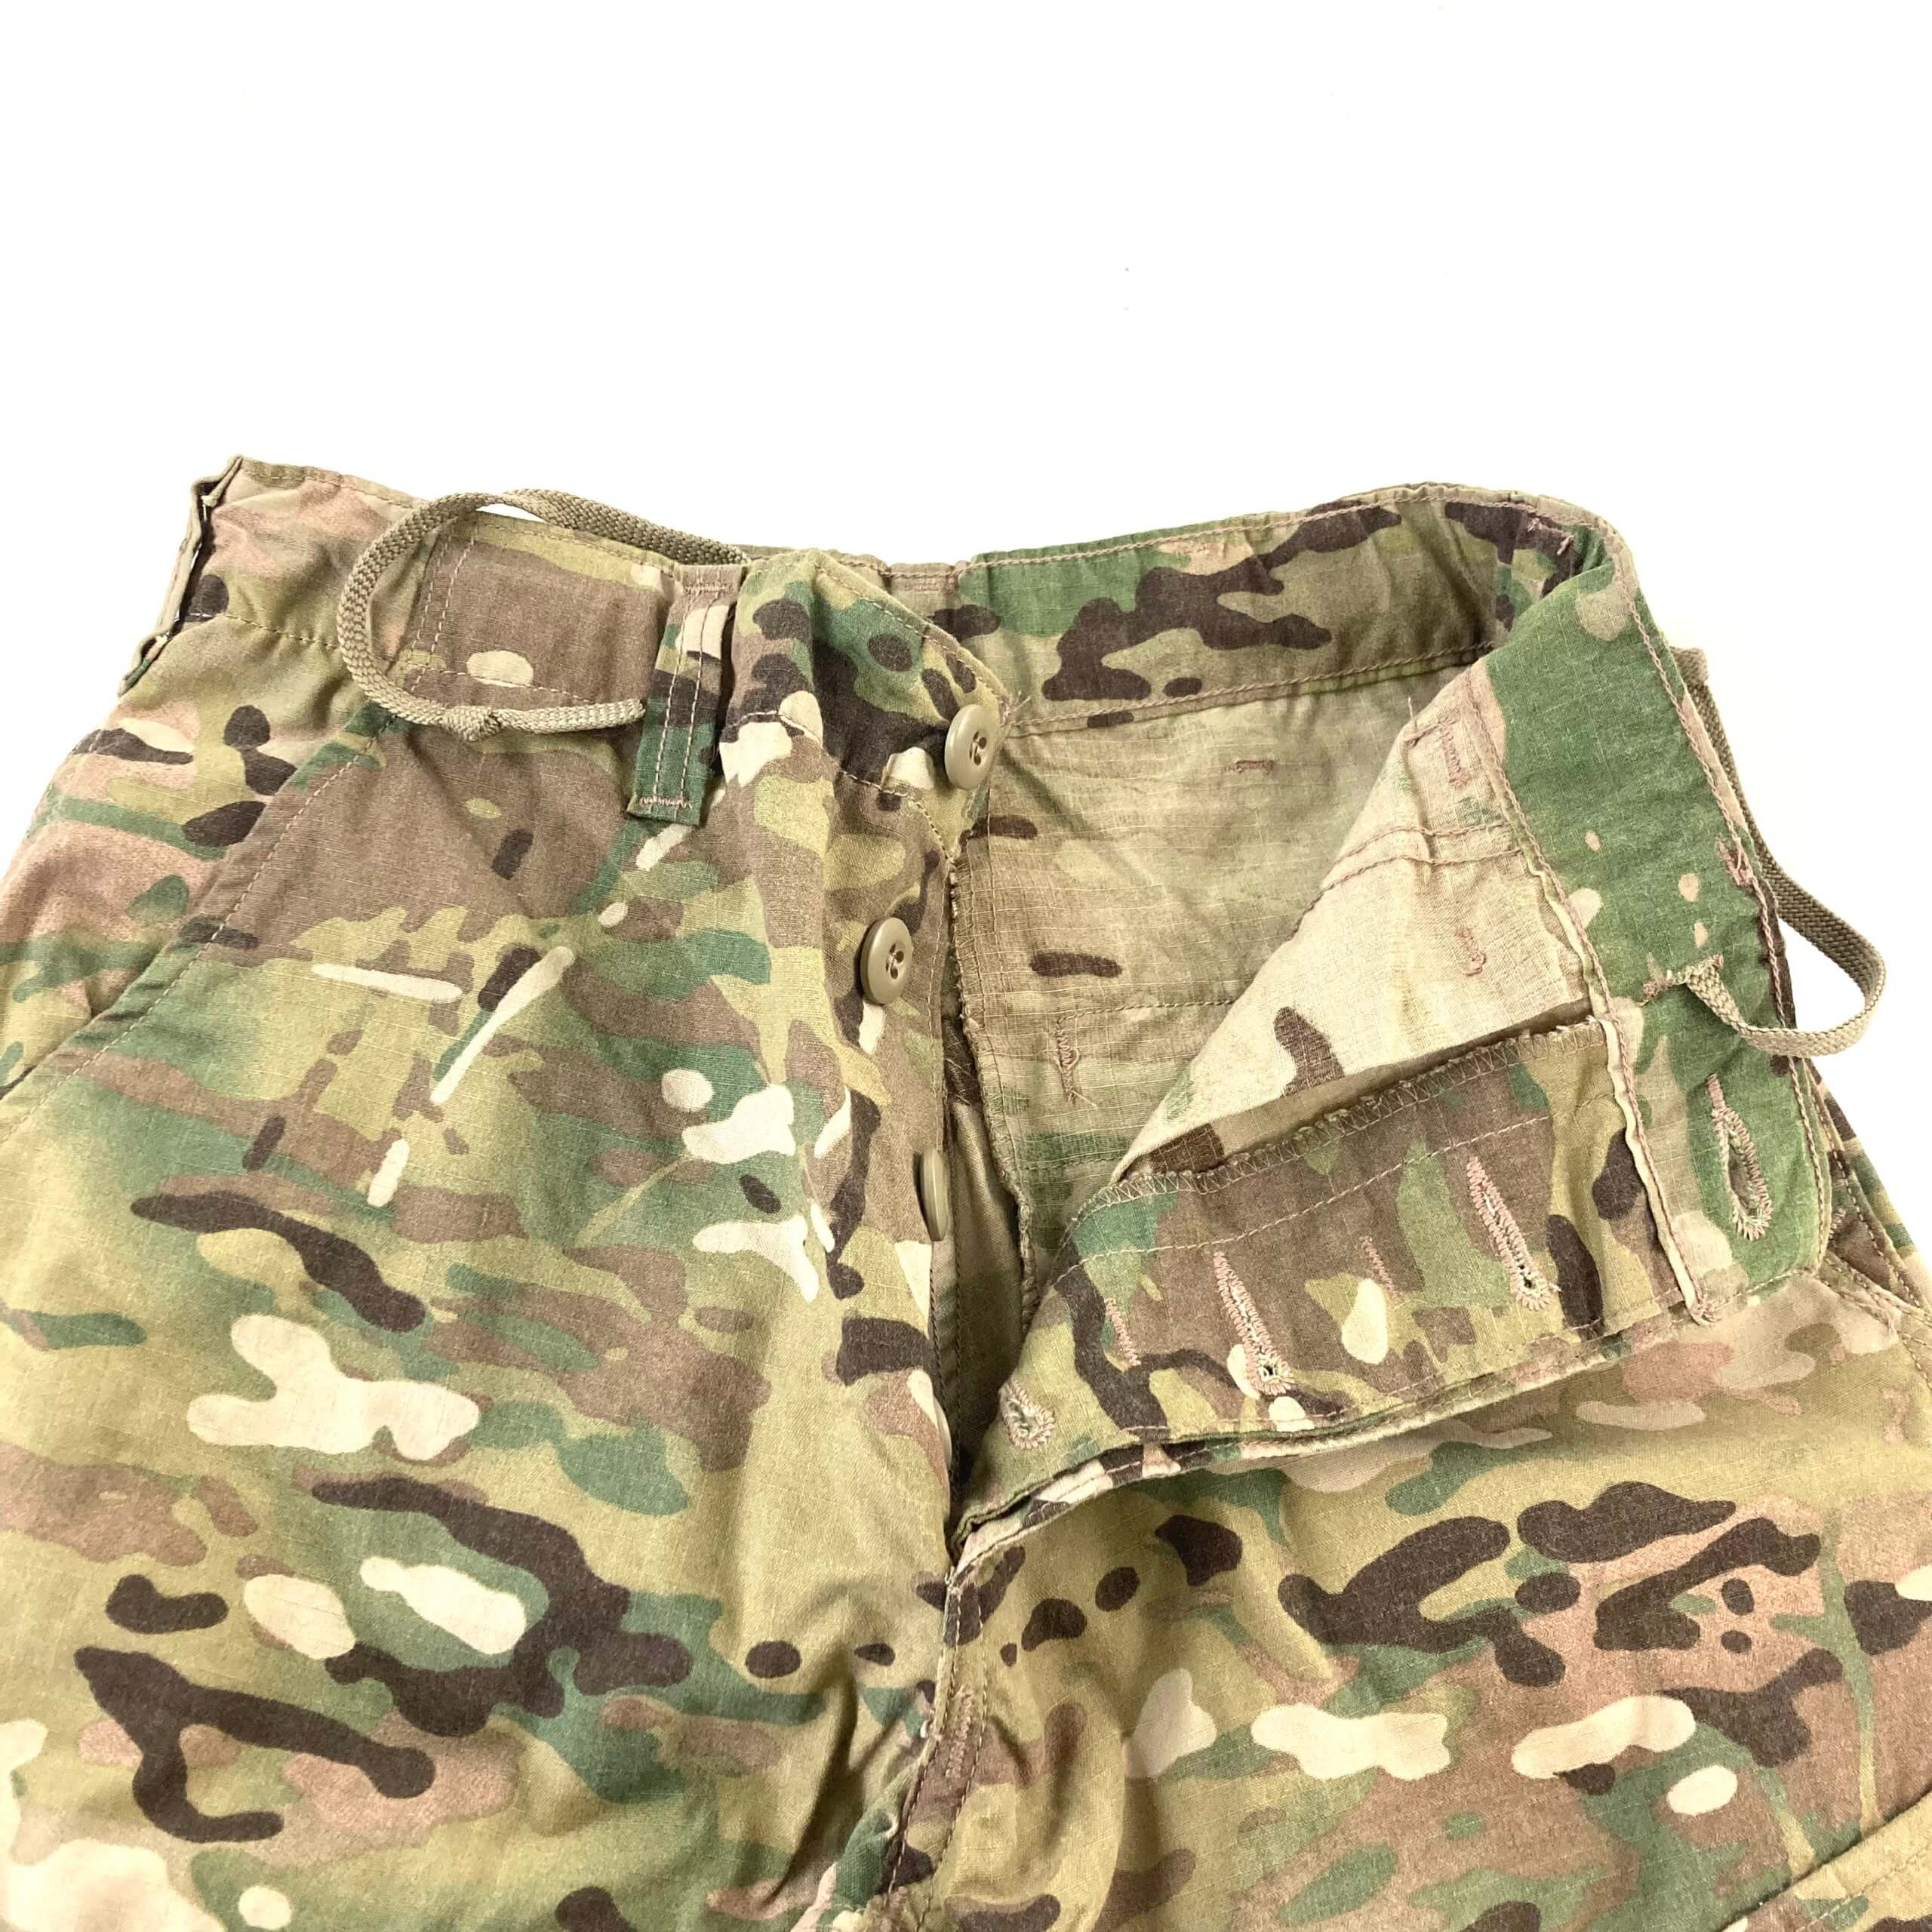 US Army FRACU Multicam Pants [Army Issue]